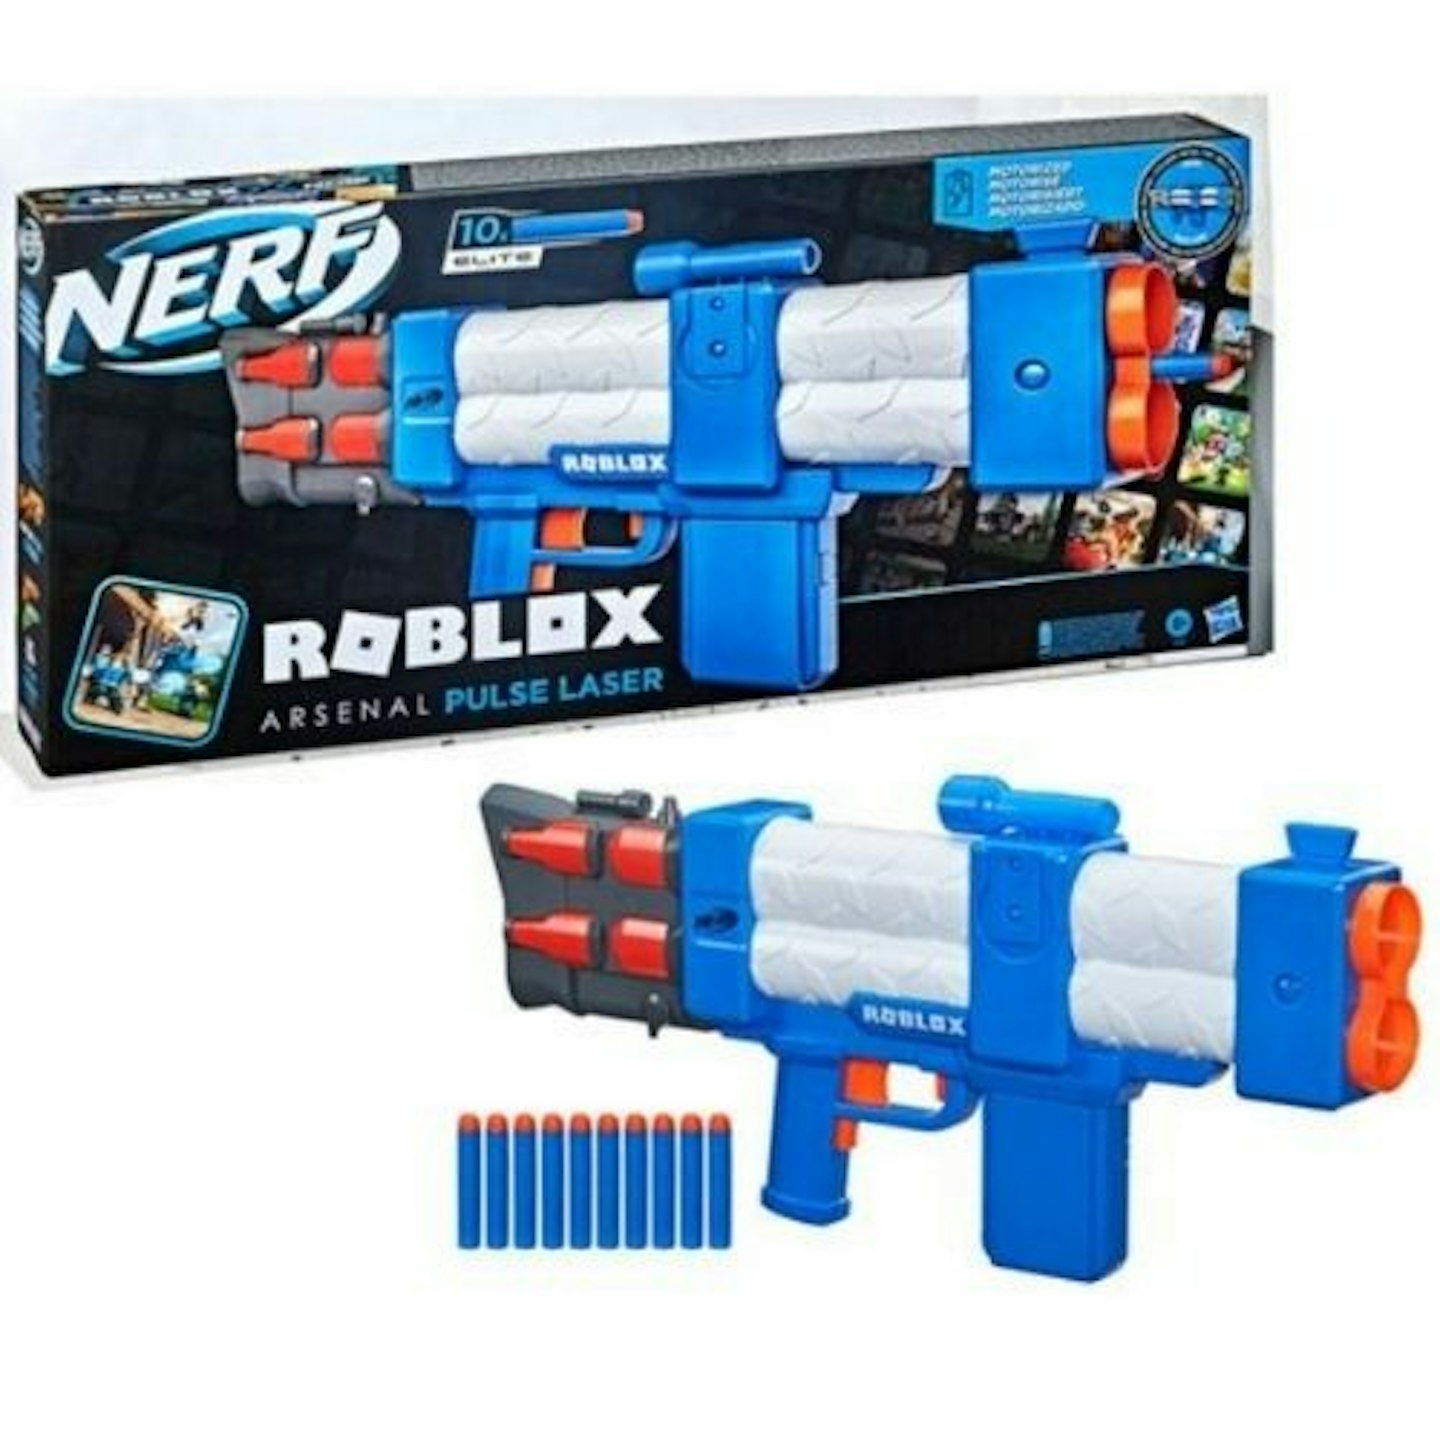 Nerf ROBLOX Arsenal Pulse Laser Blaster